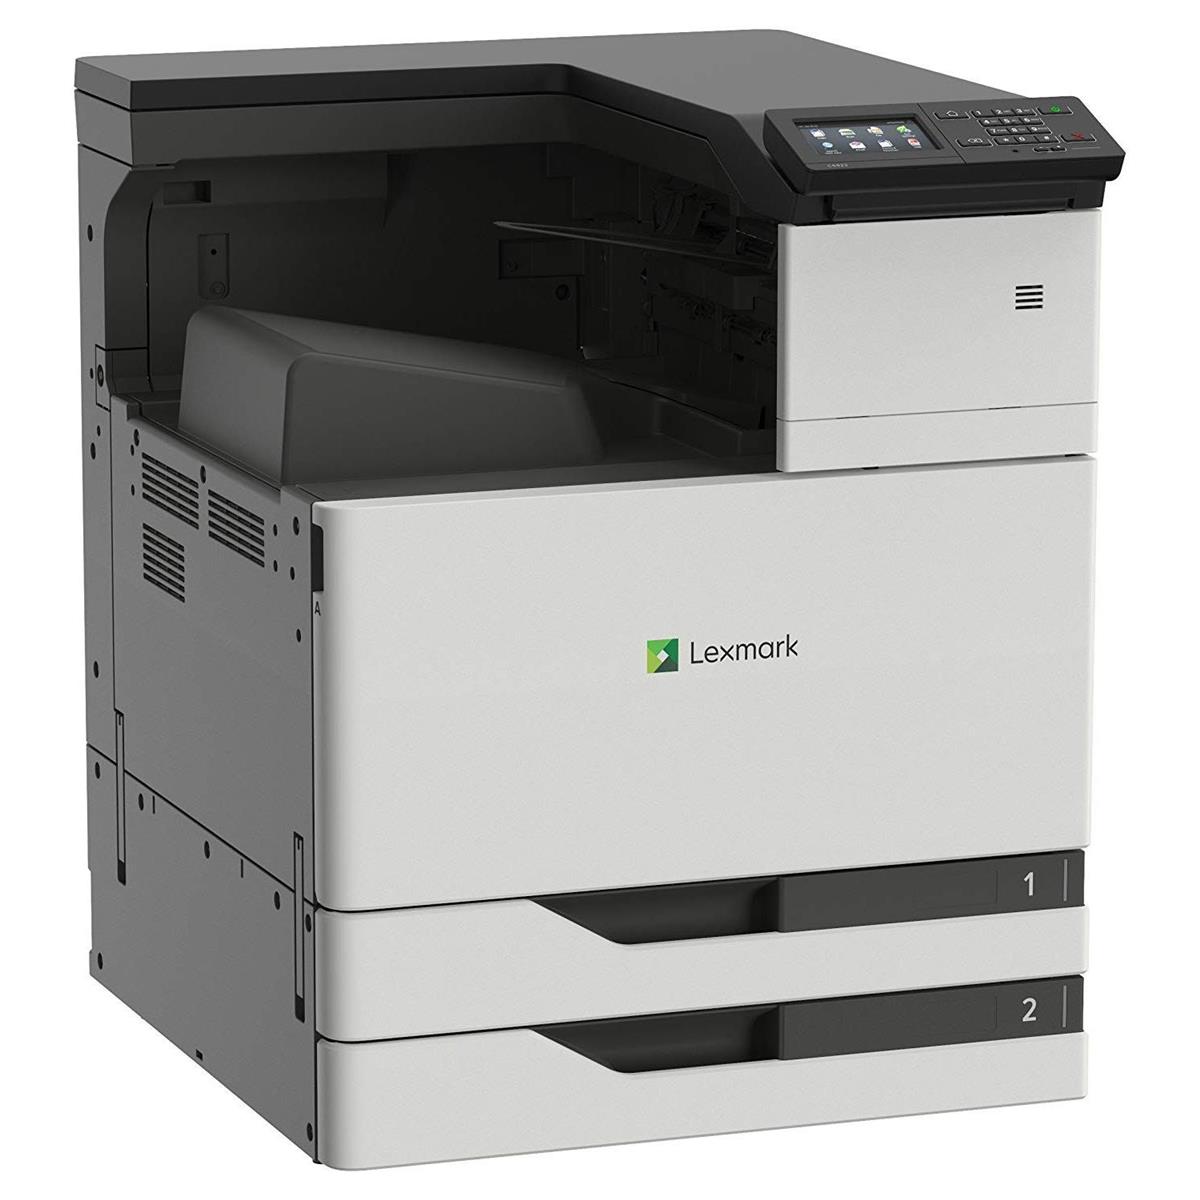 Image of Lexmark CS923de Color Laser Printer